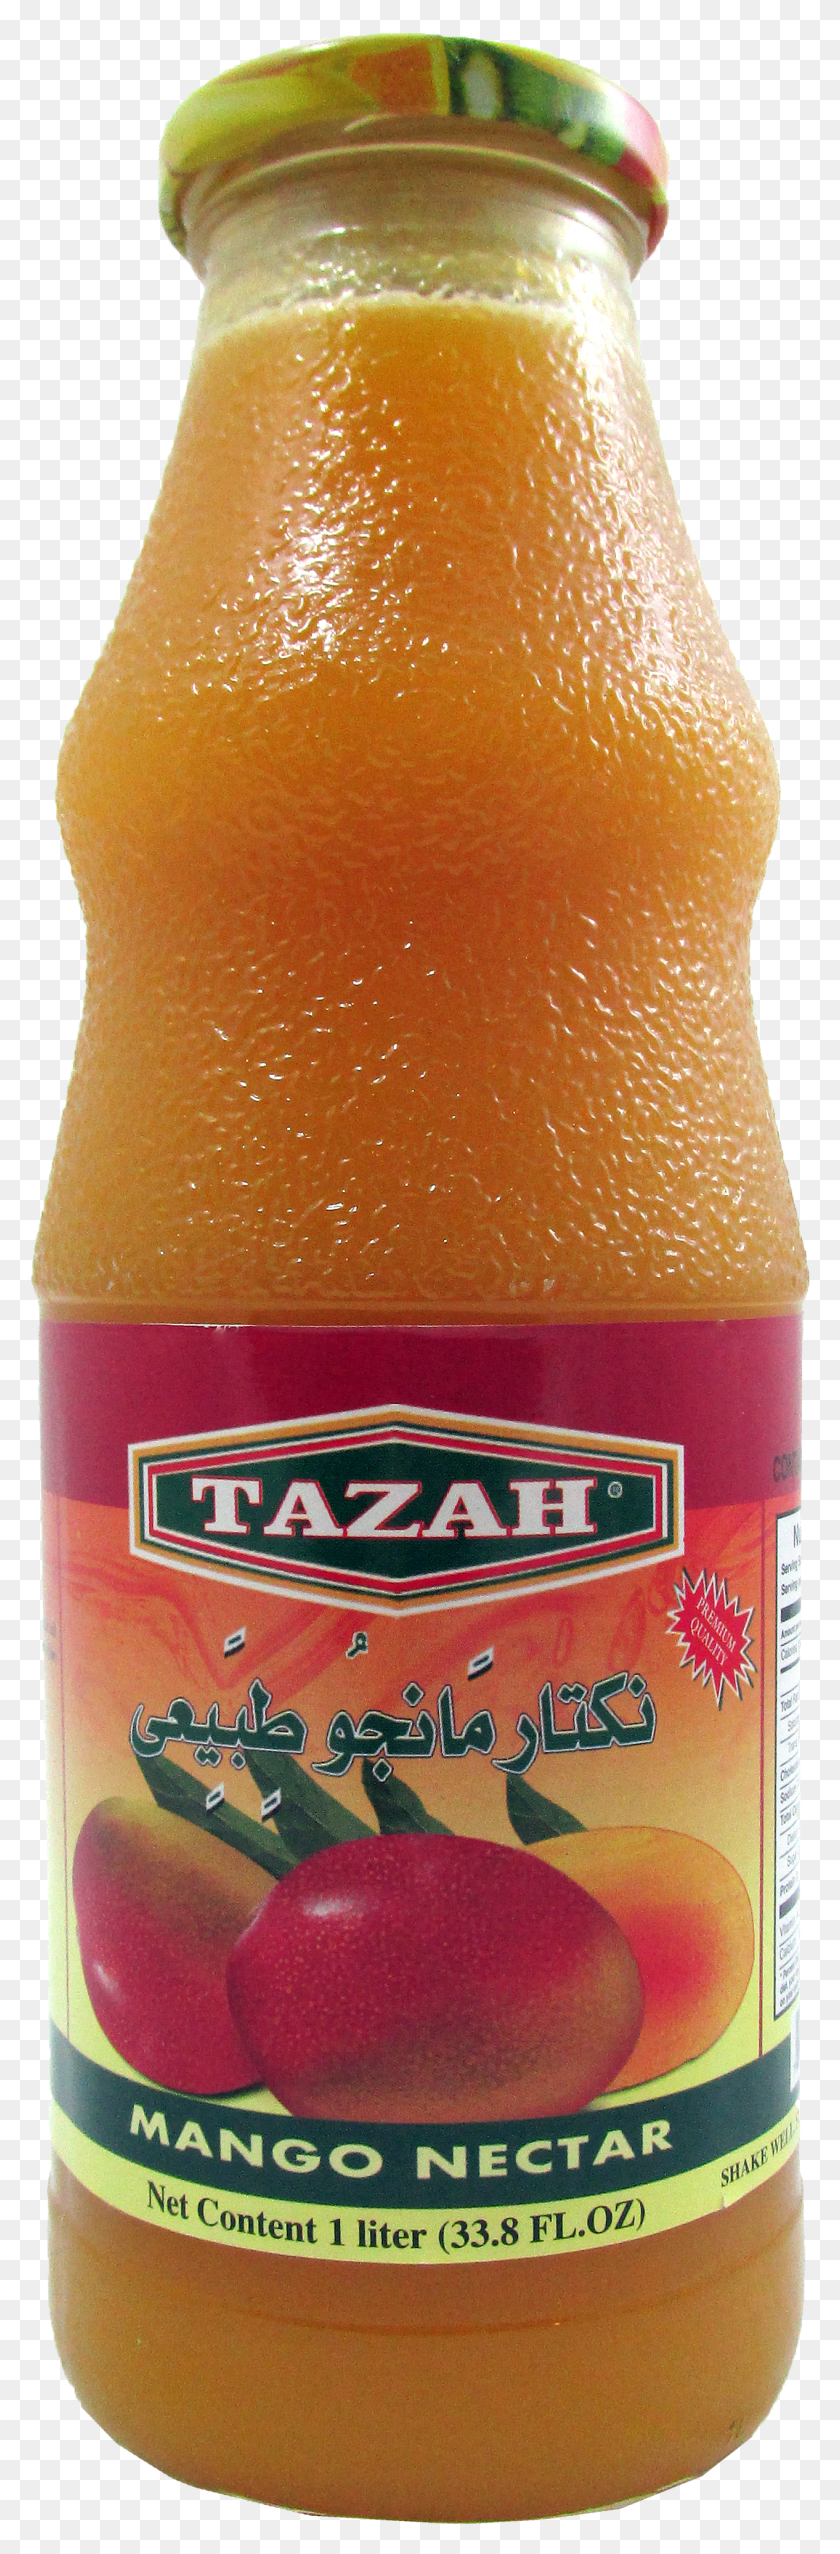 1266x4048 Tazah Mango Nectar Bottle HD PNG Download